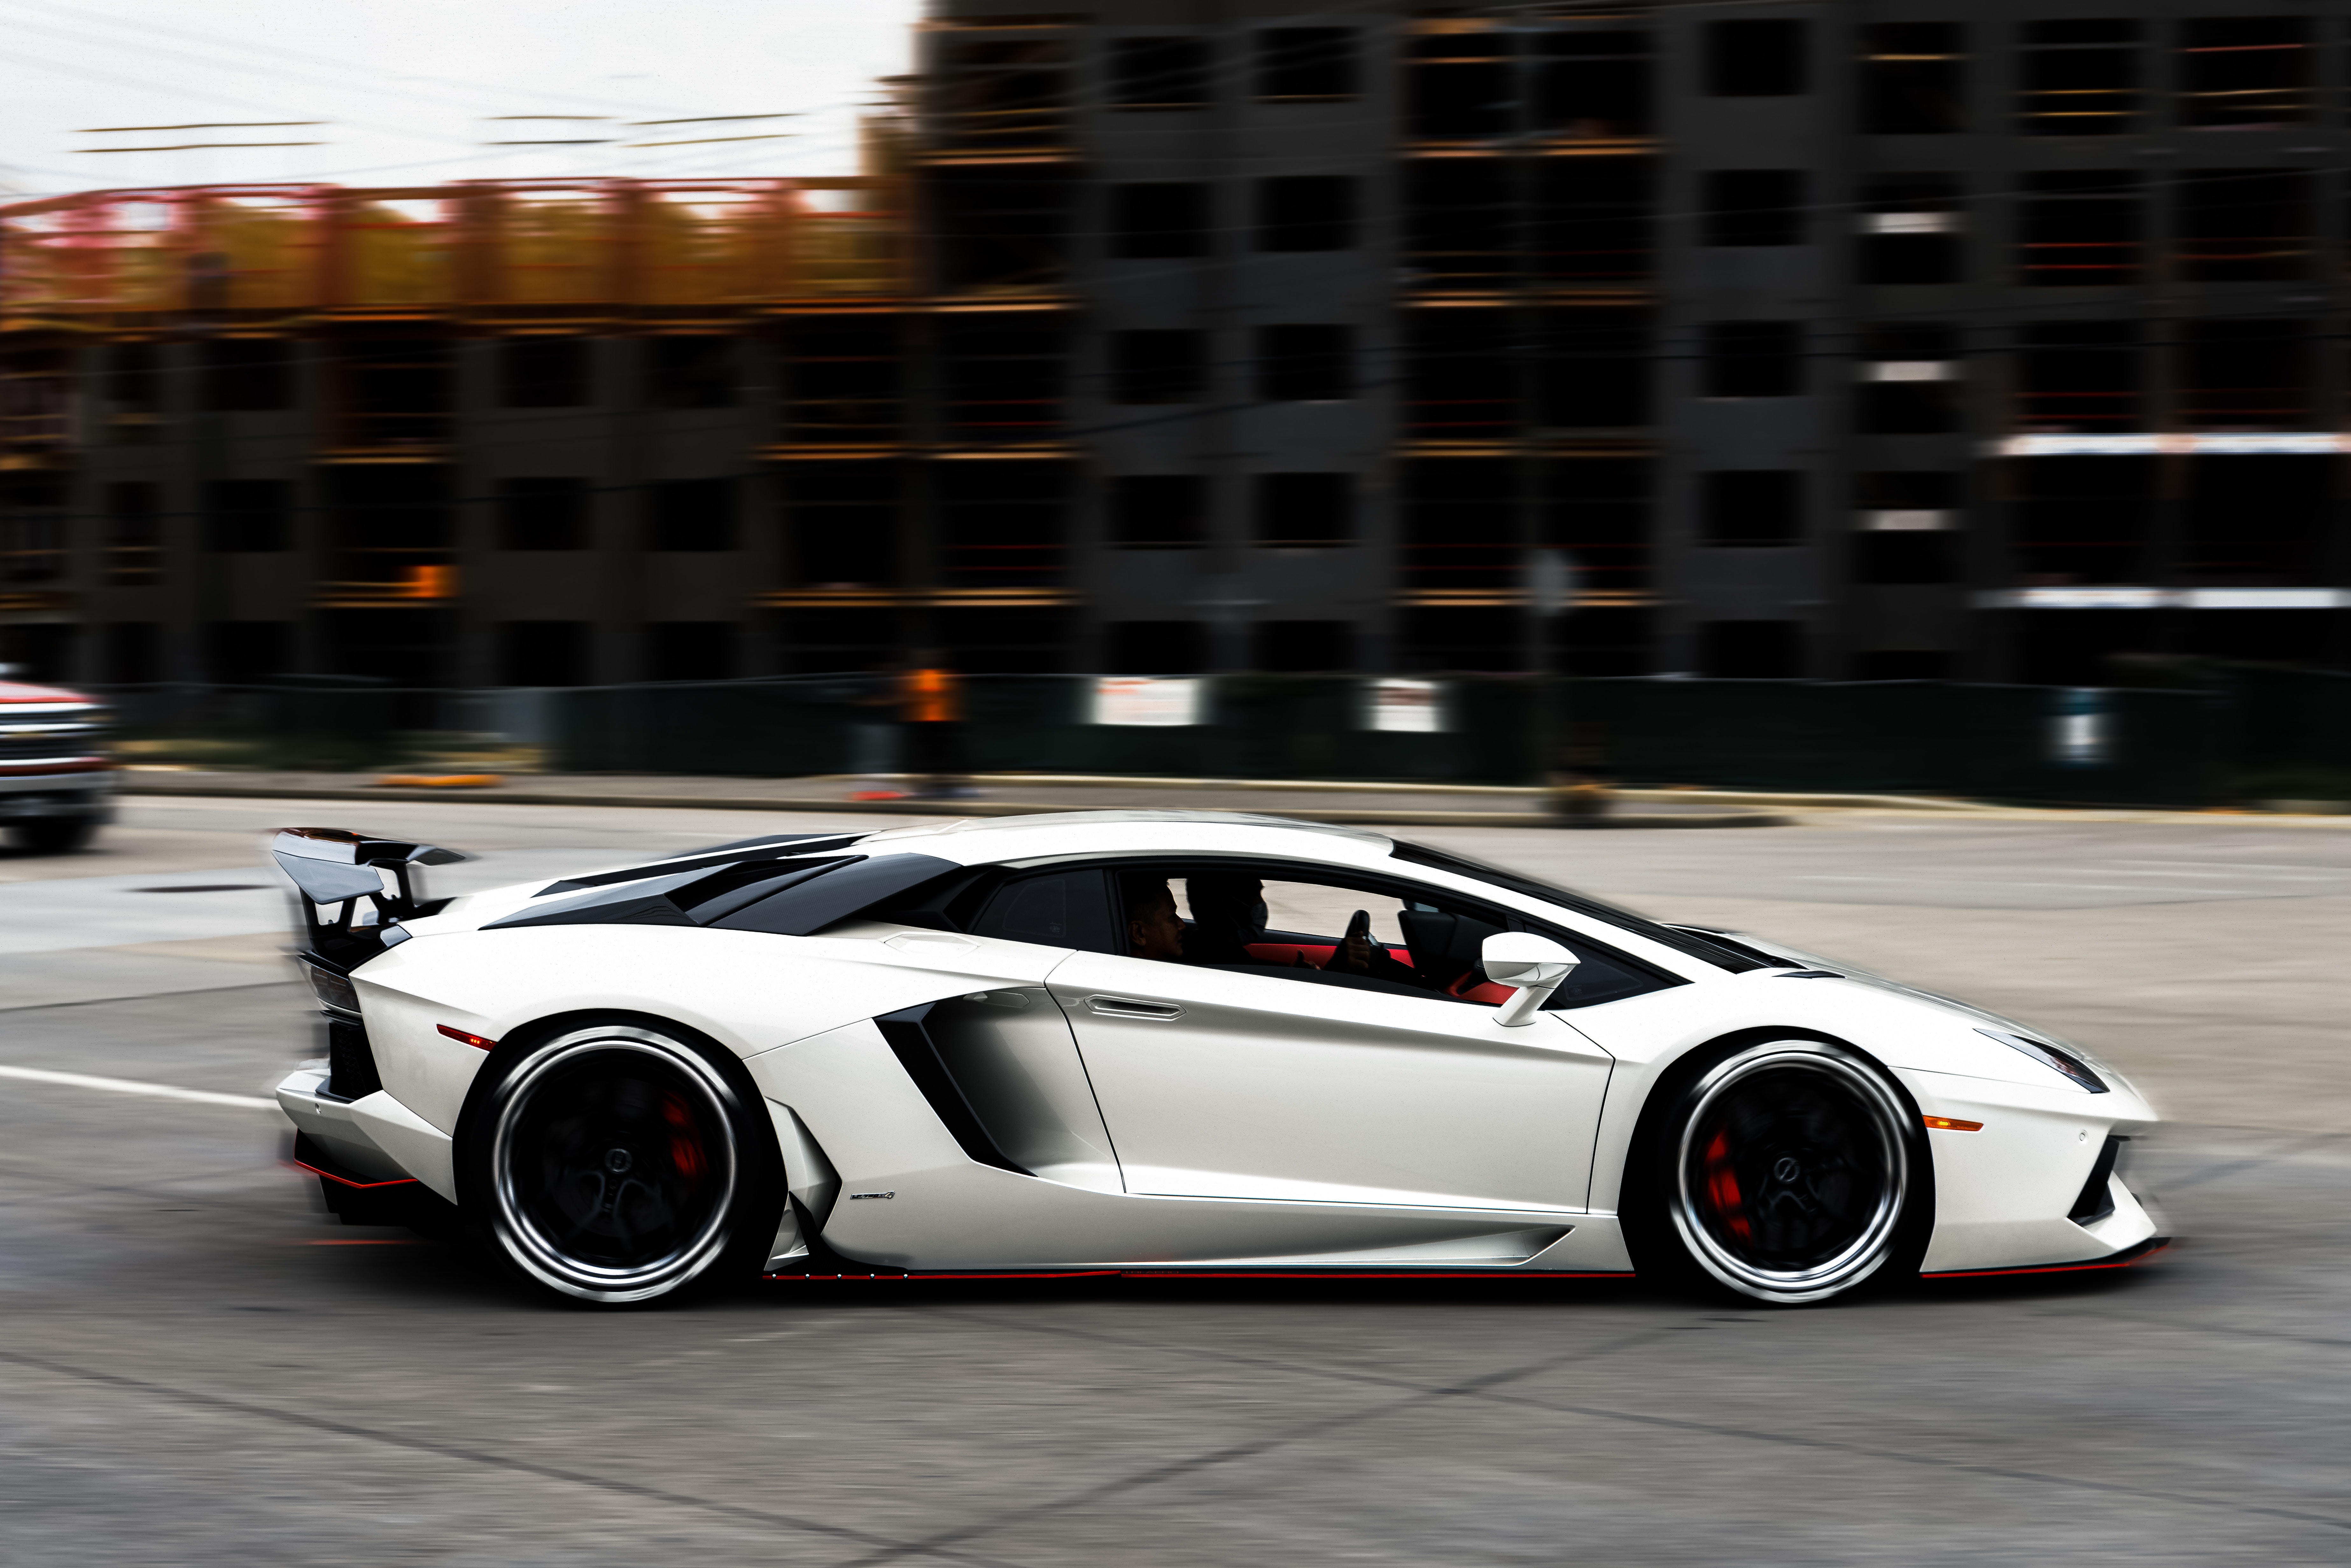 Best Lamborghini Aventador Photo · 100% Free Downloads